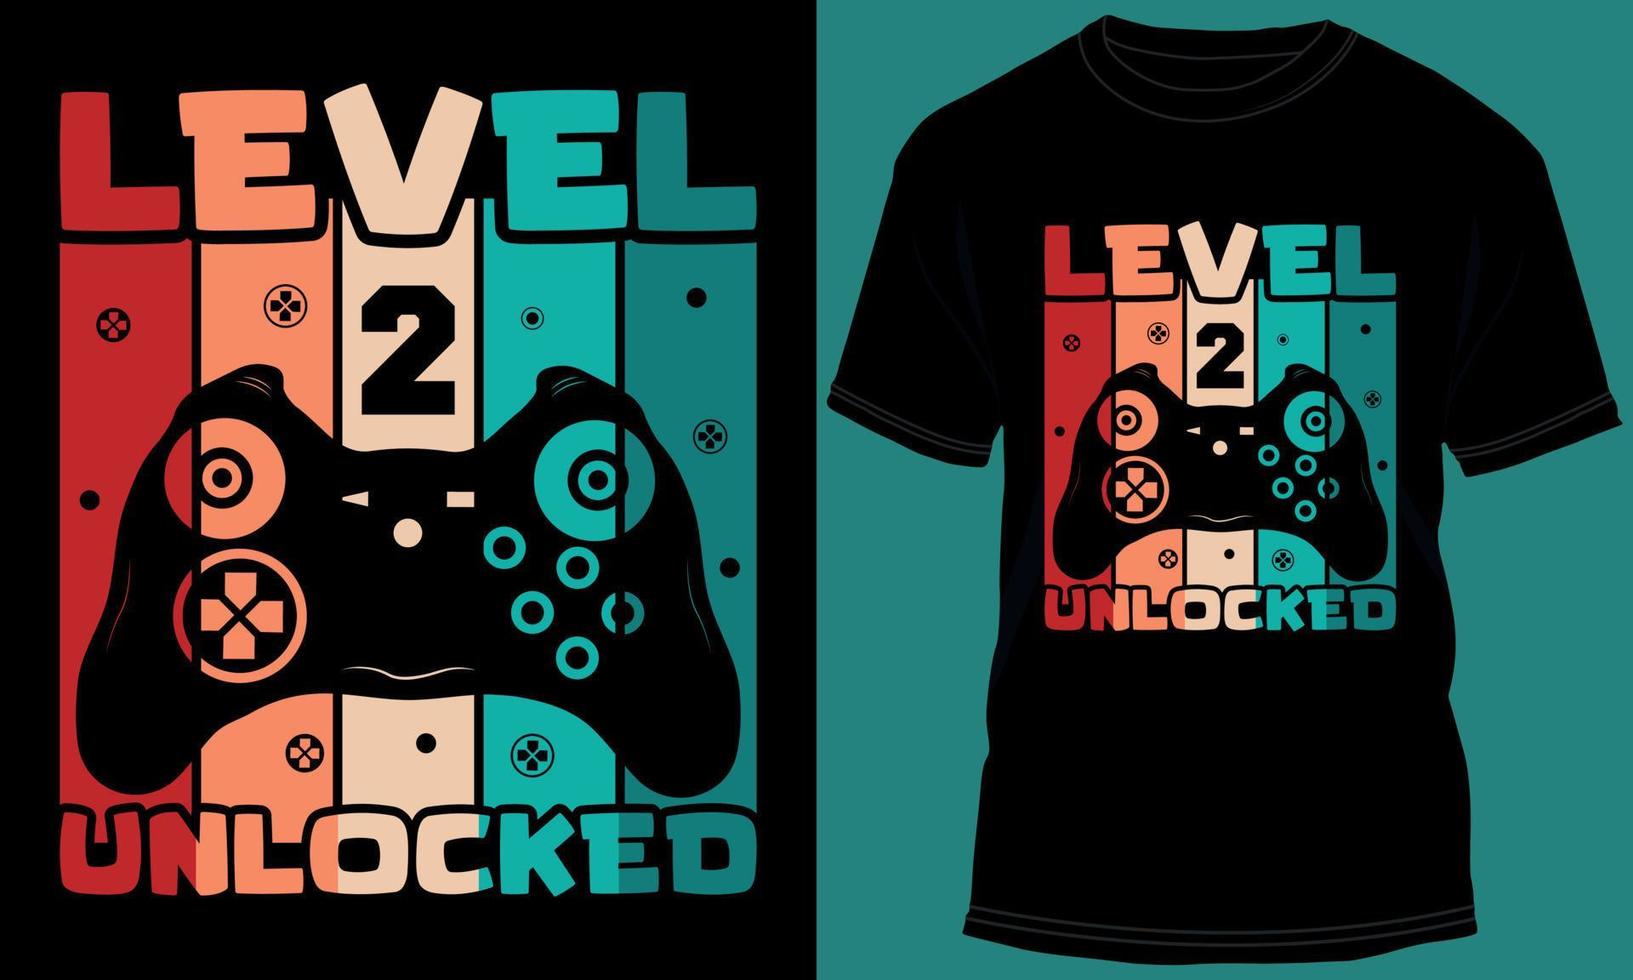 Gamer or Gaming Level 2 Unlocked Tshirt Design vector